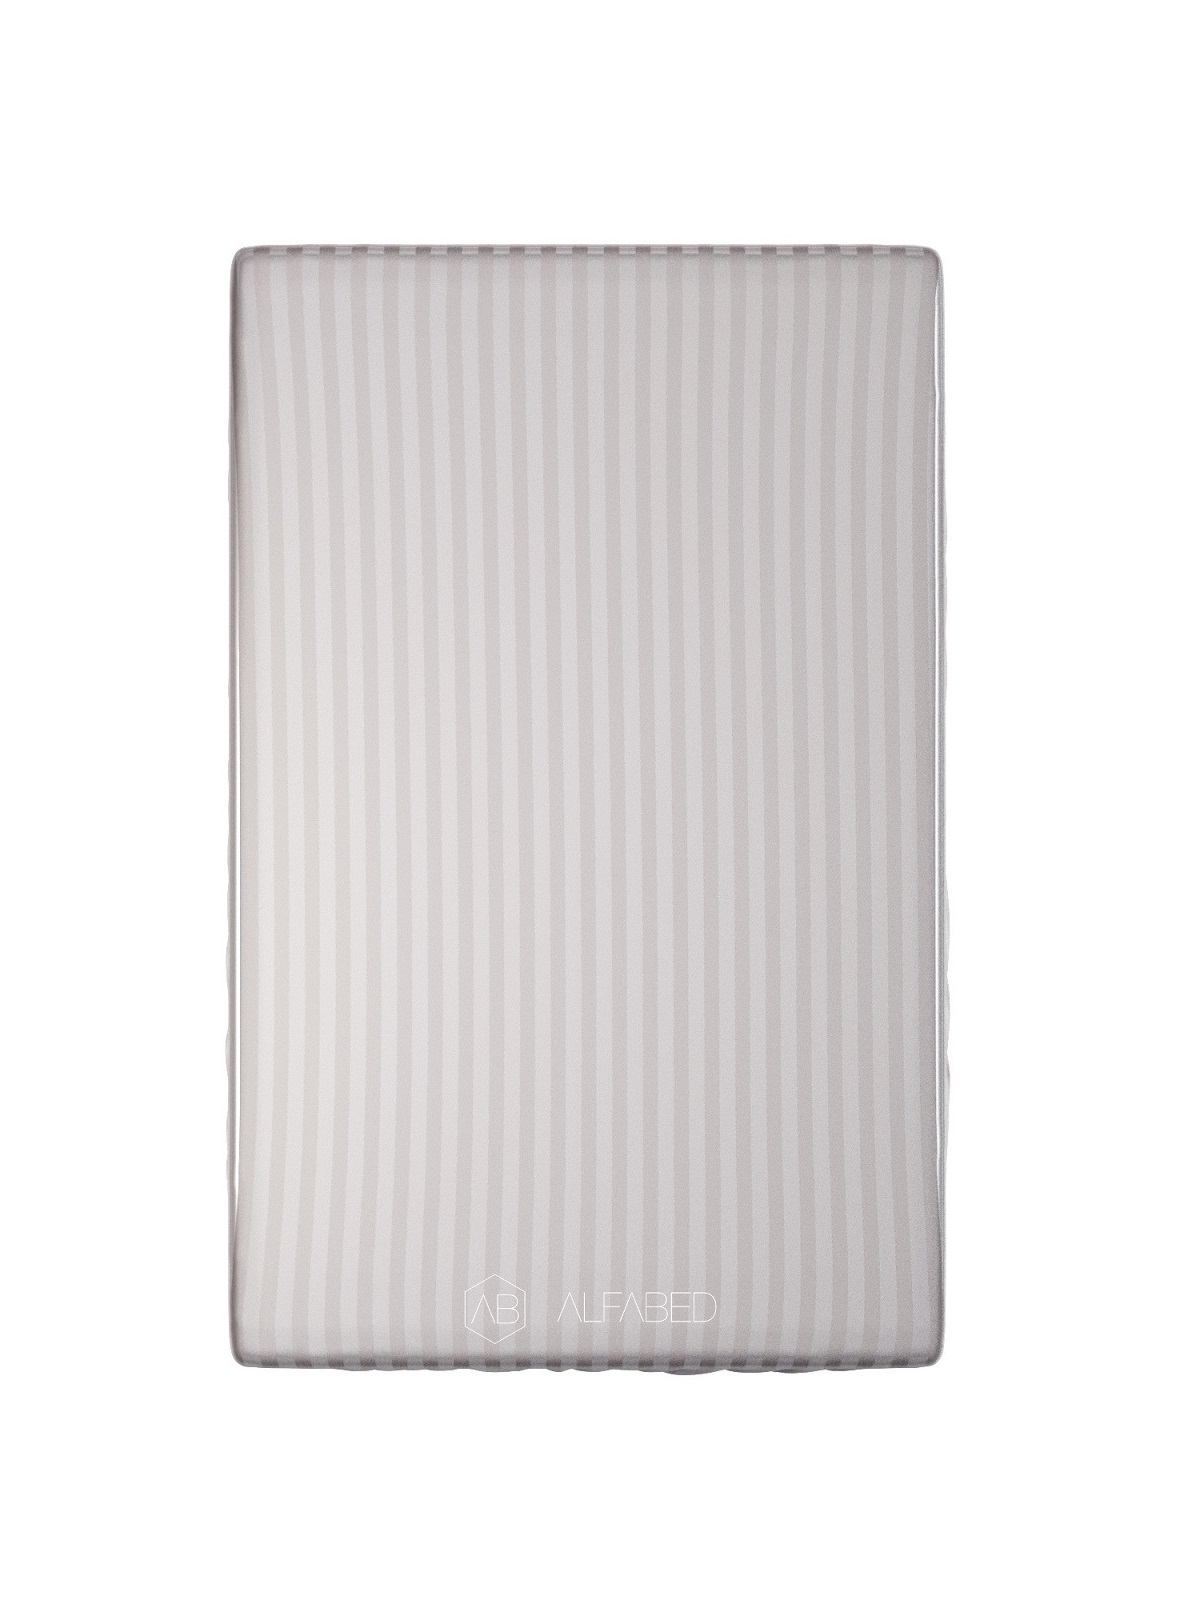 Topper Sheet-Case Premium Woven Cotton Sateen Stripe Grey V H-15